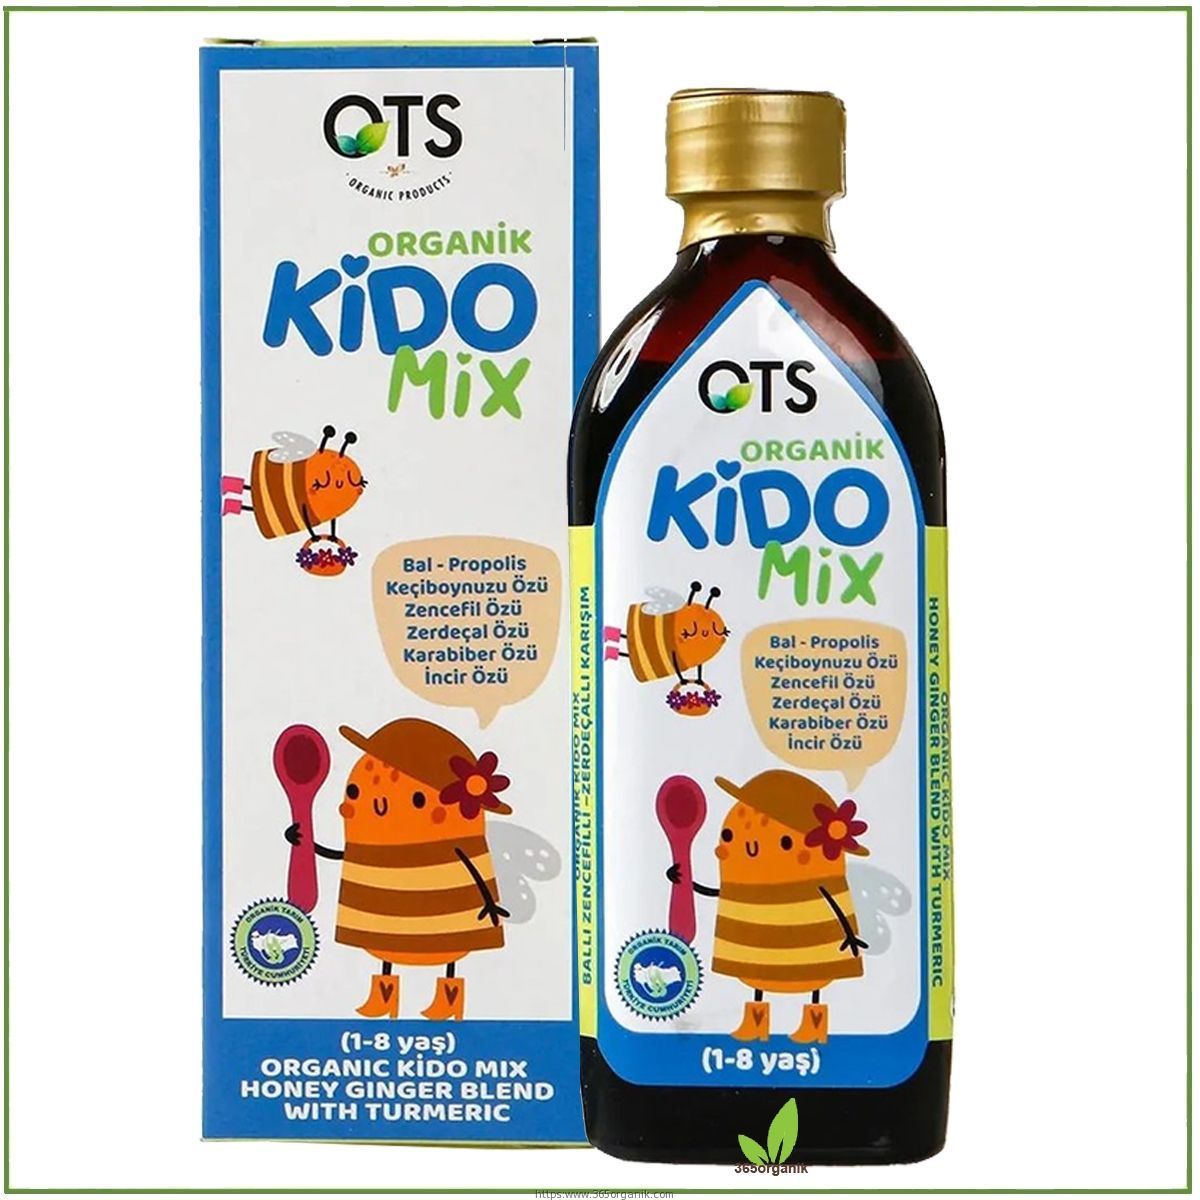 OTS Organik Kido Mix 1-8 yaş 180 ml | OTS | Organik Bebek Beslenmesi | 